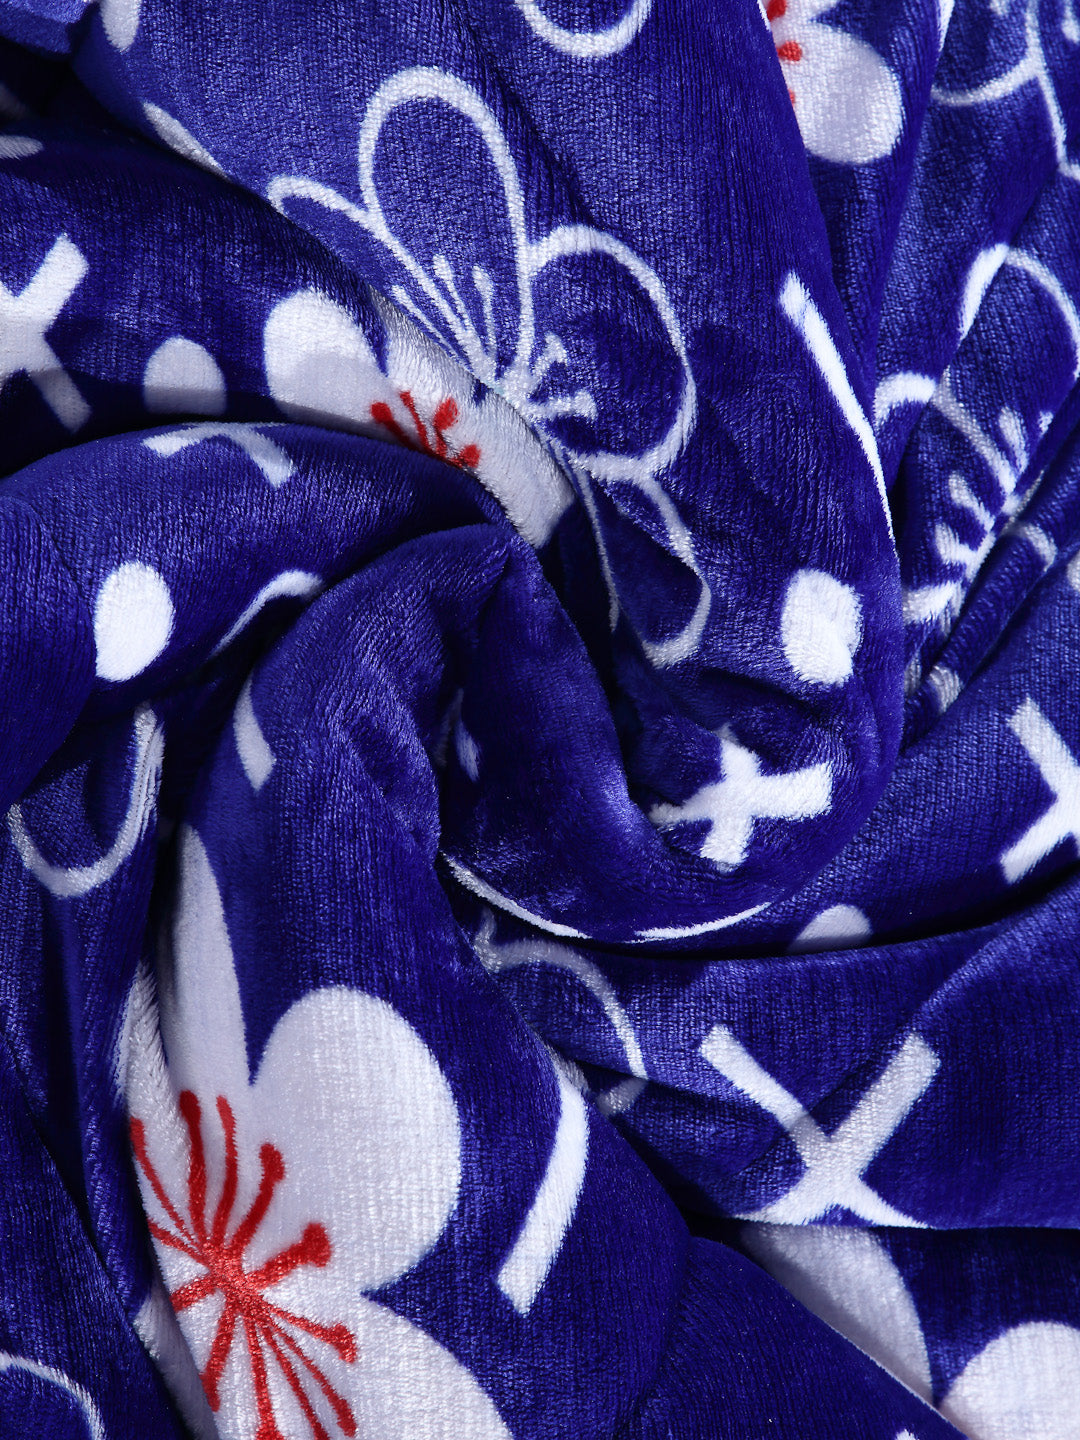 Arrabi Blue Floral Polyester King Size 950 GSM Double Quilt (220 X 210 cm)